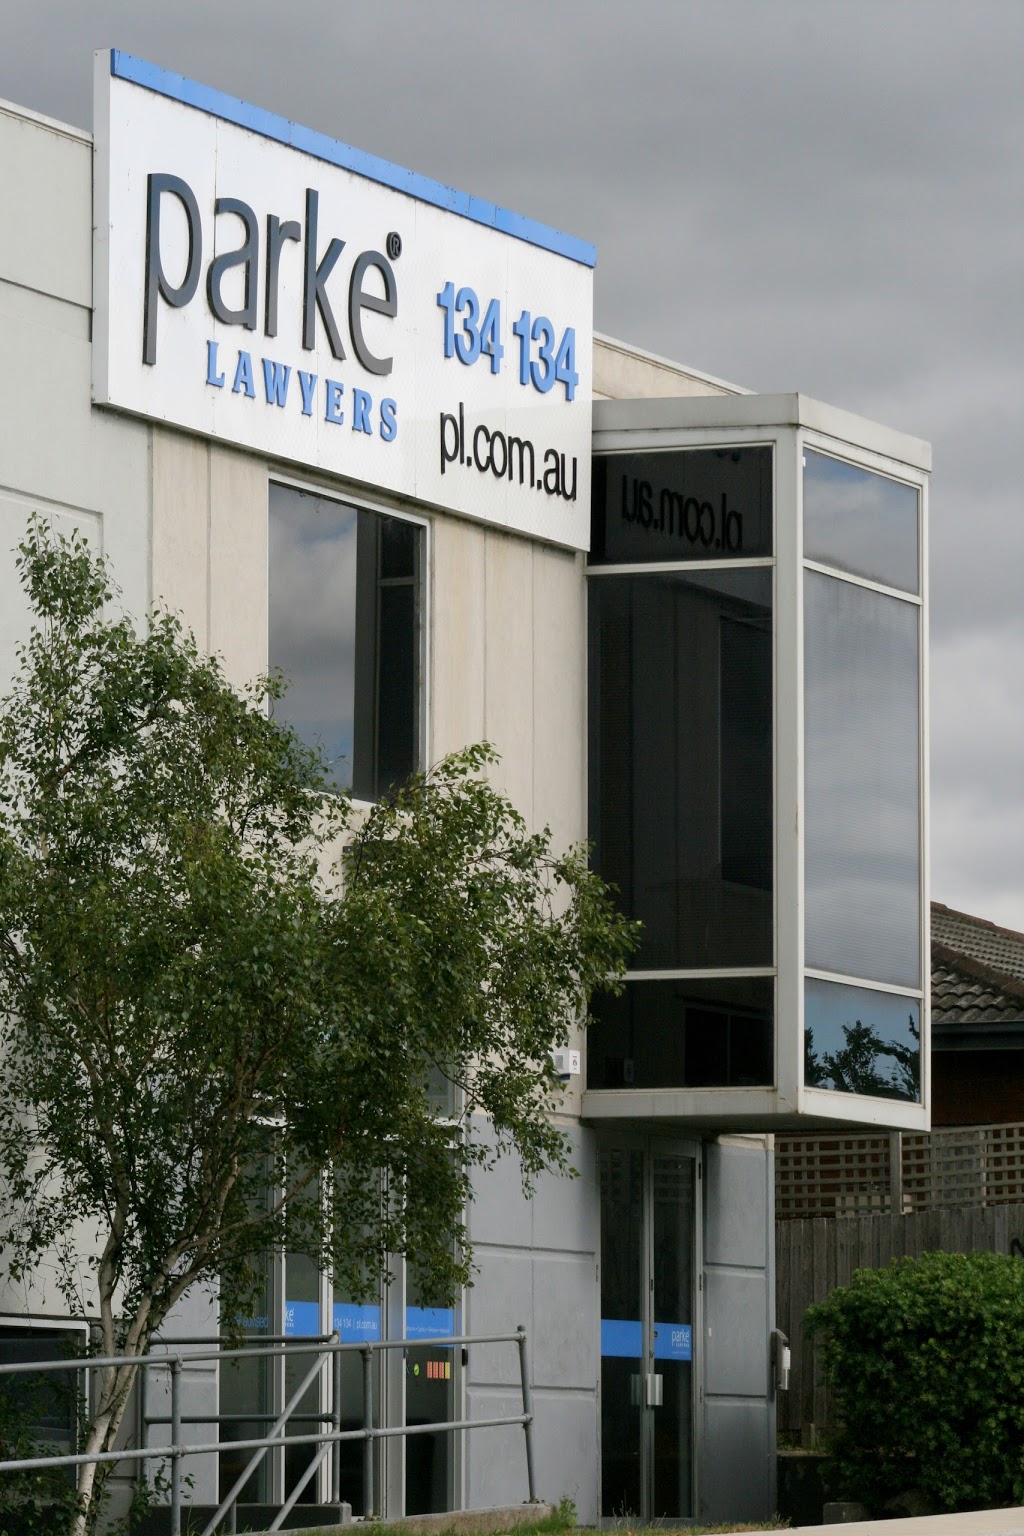 Parke Lawyers | lawyer | 8 Market St, Ringwood VIC 3134, Australia | 134134 OR +61 134134